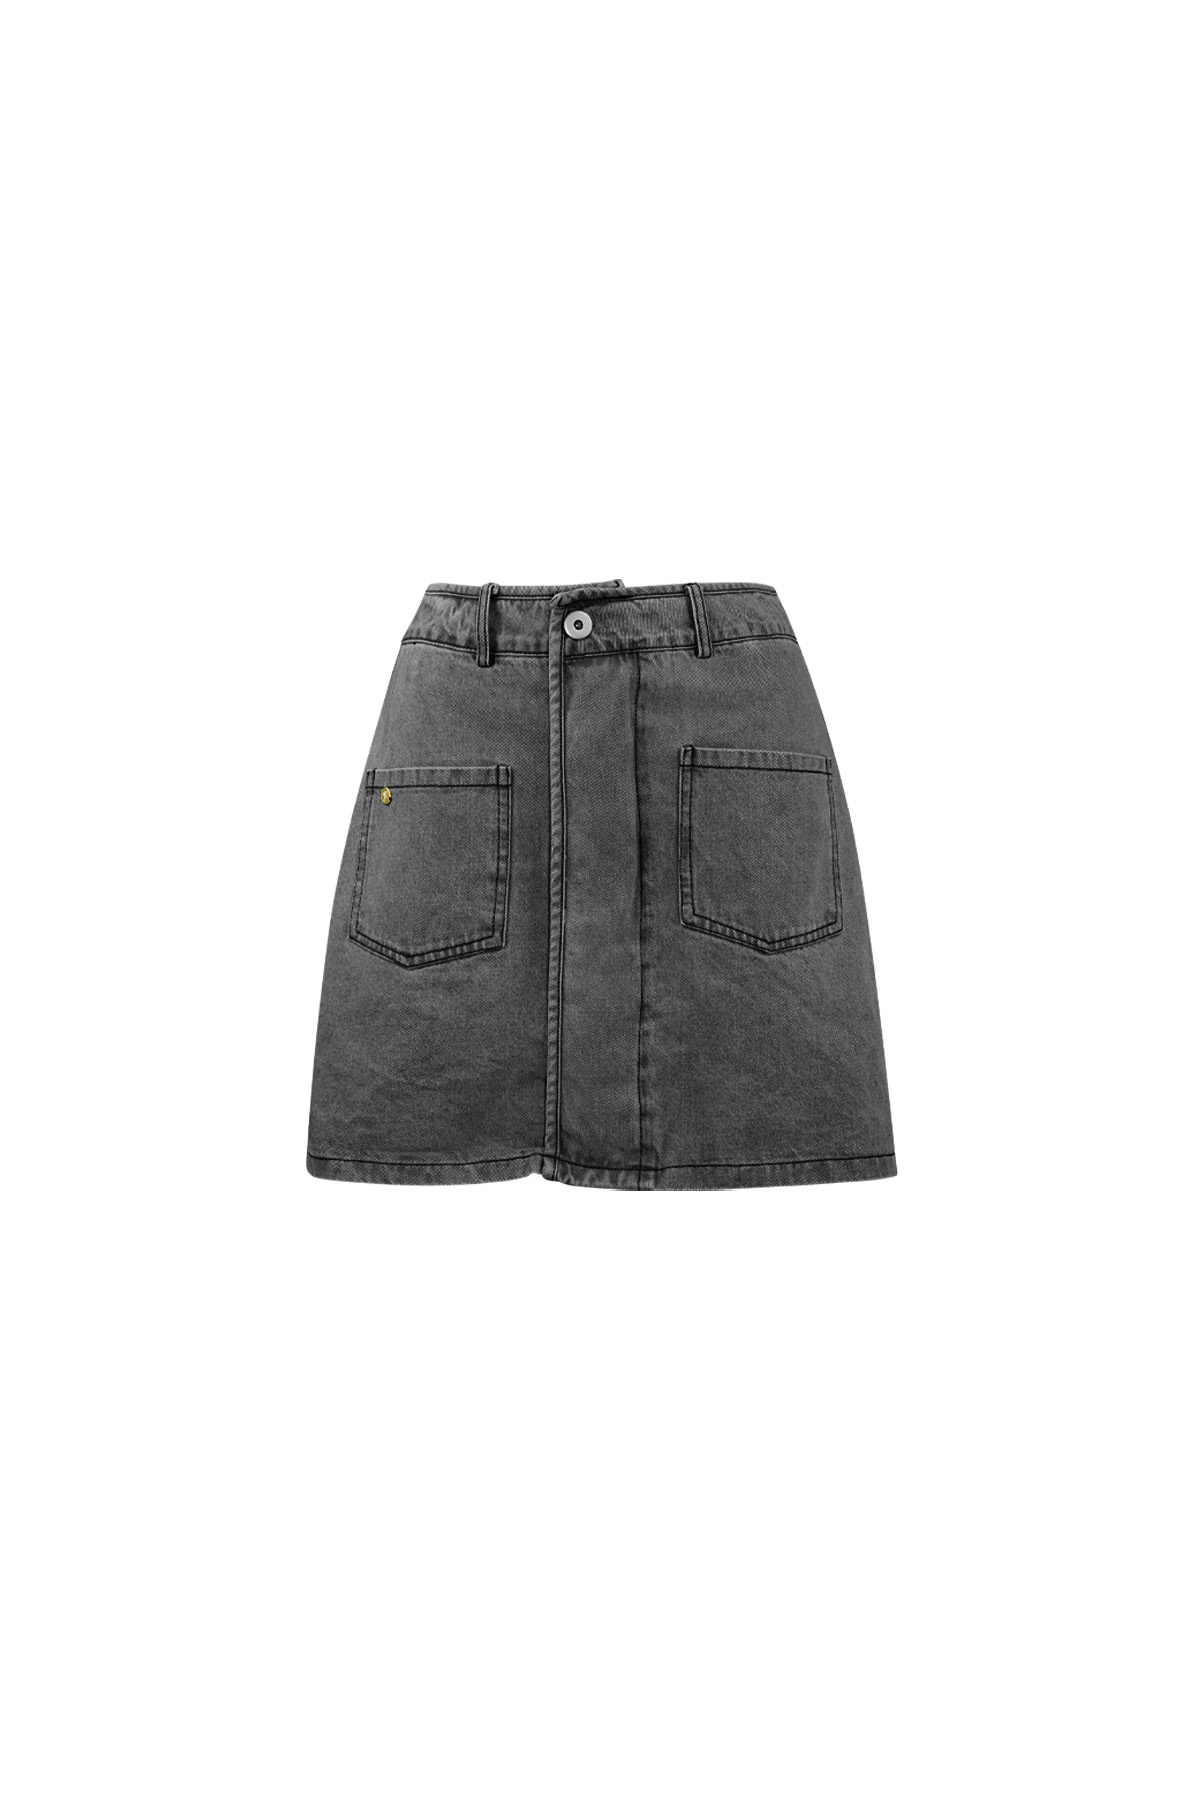 Denim skirt with pockets - gray